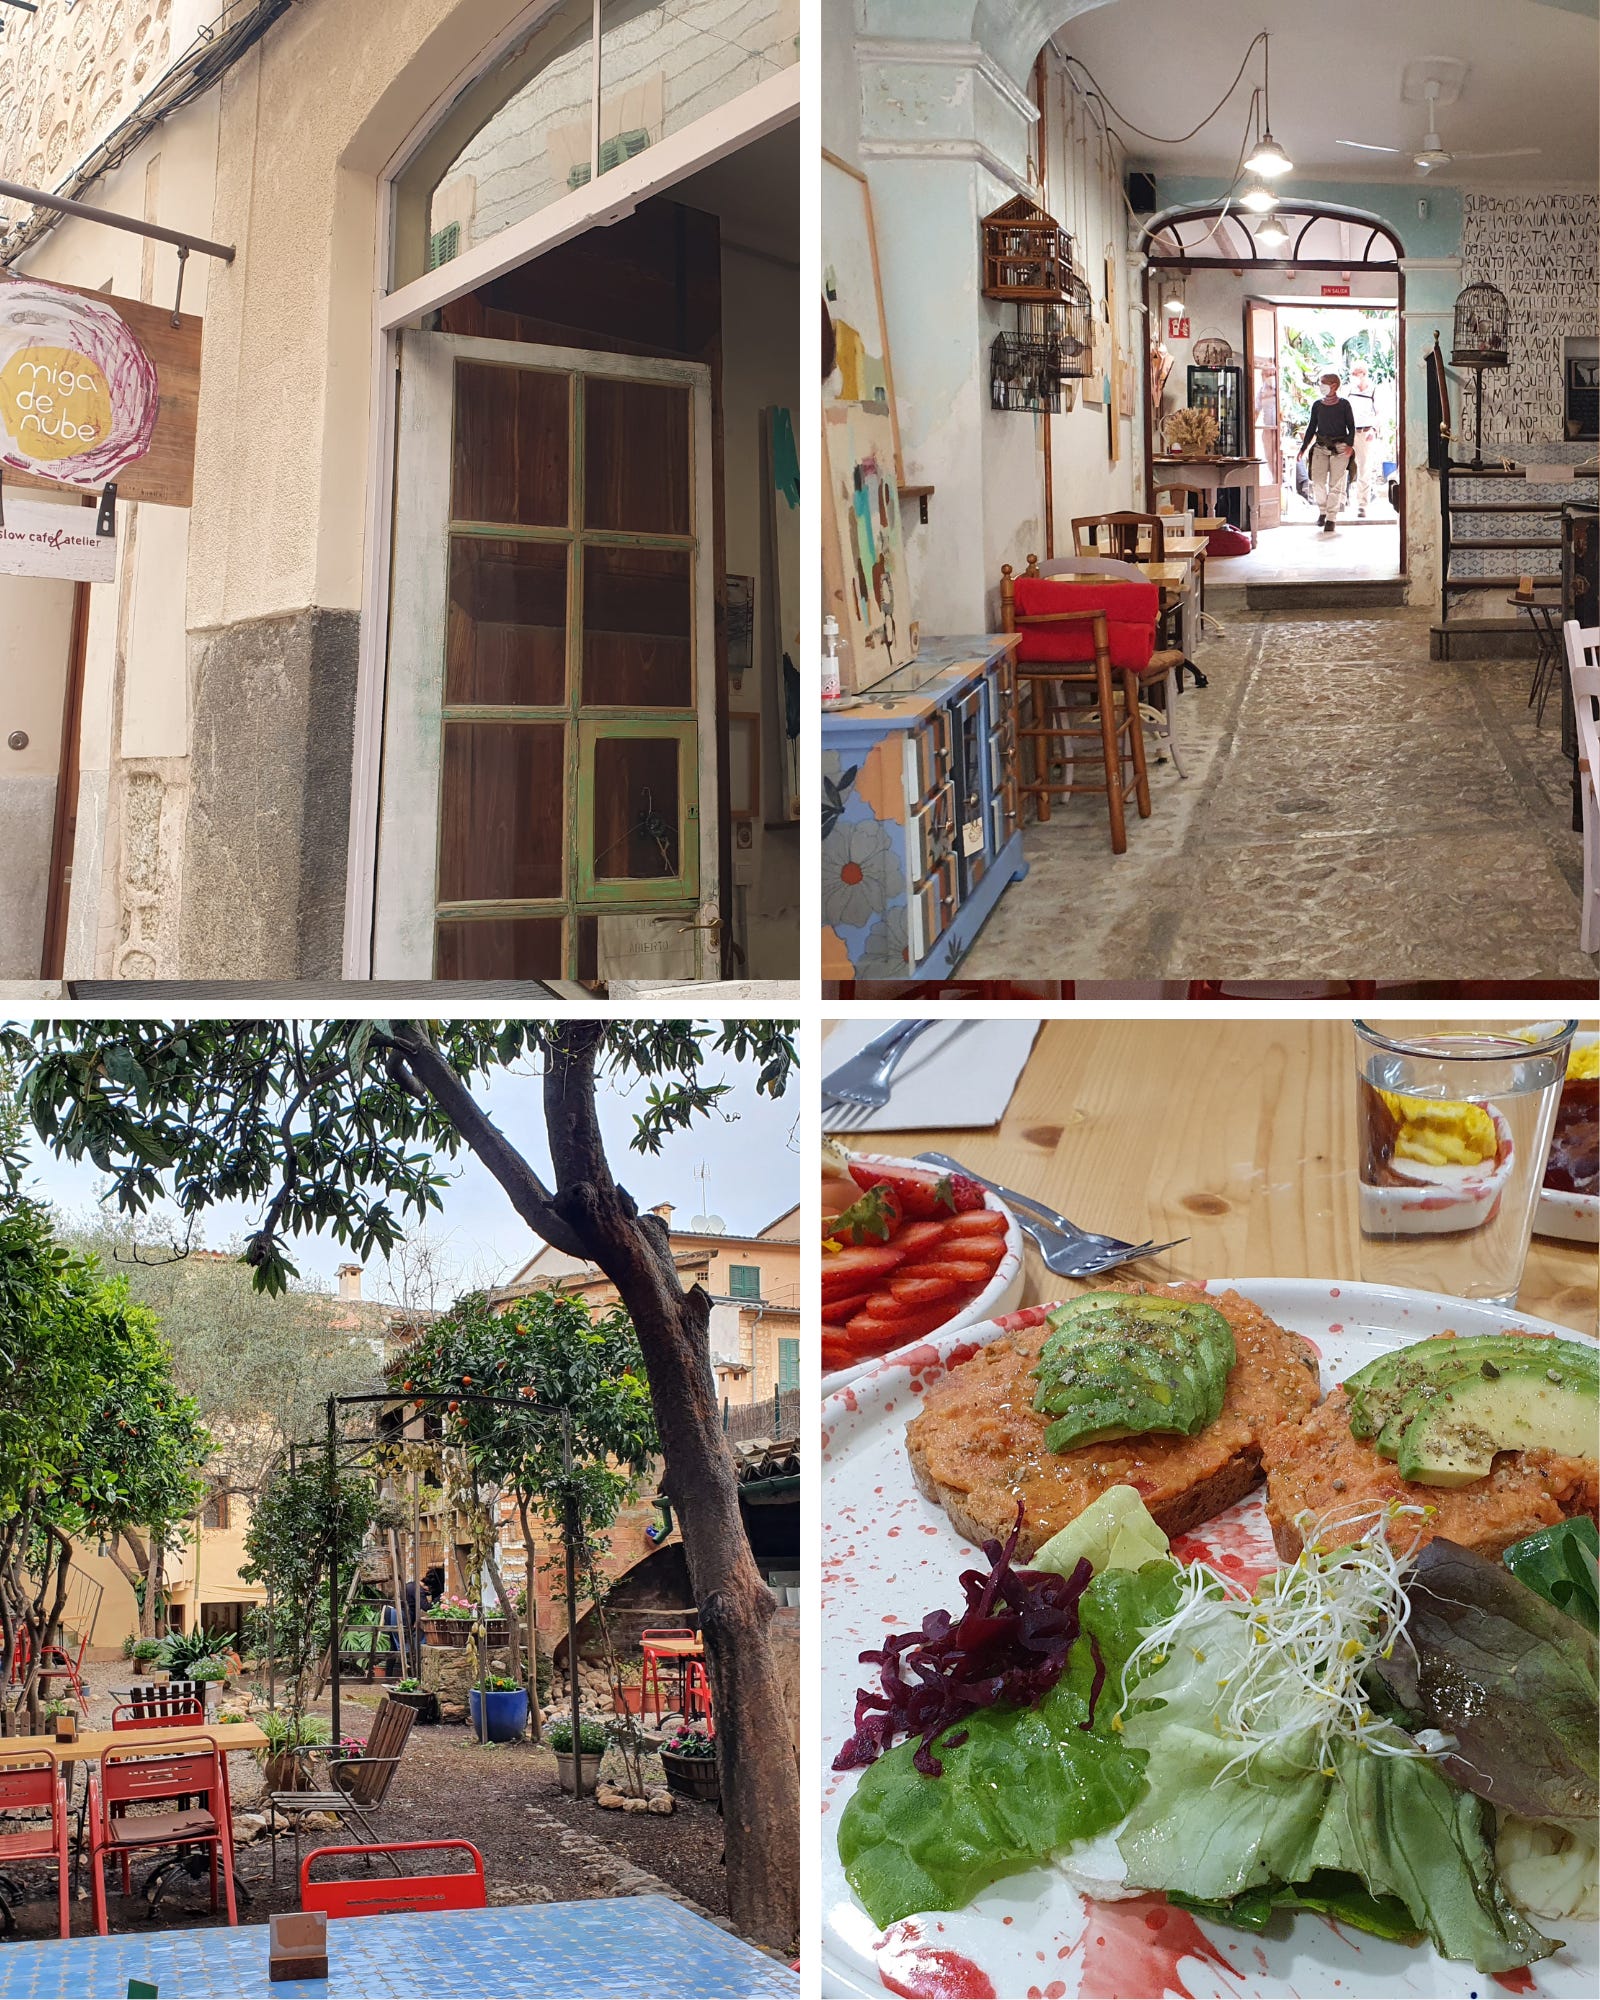 Four views of the Miga de Nube Cafe in Soller